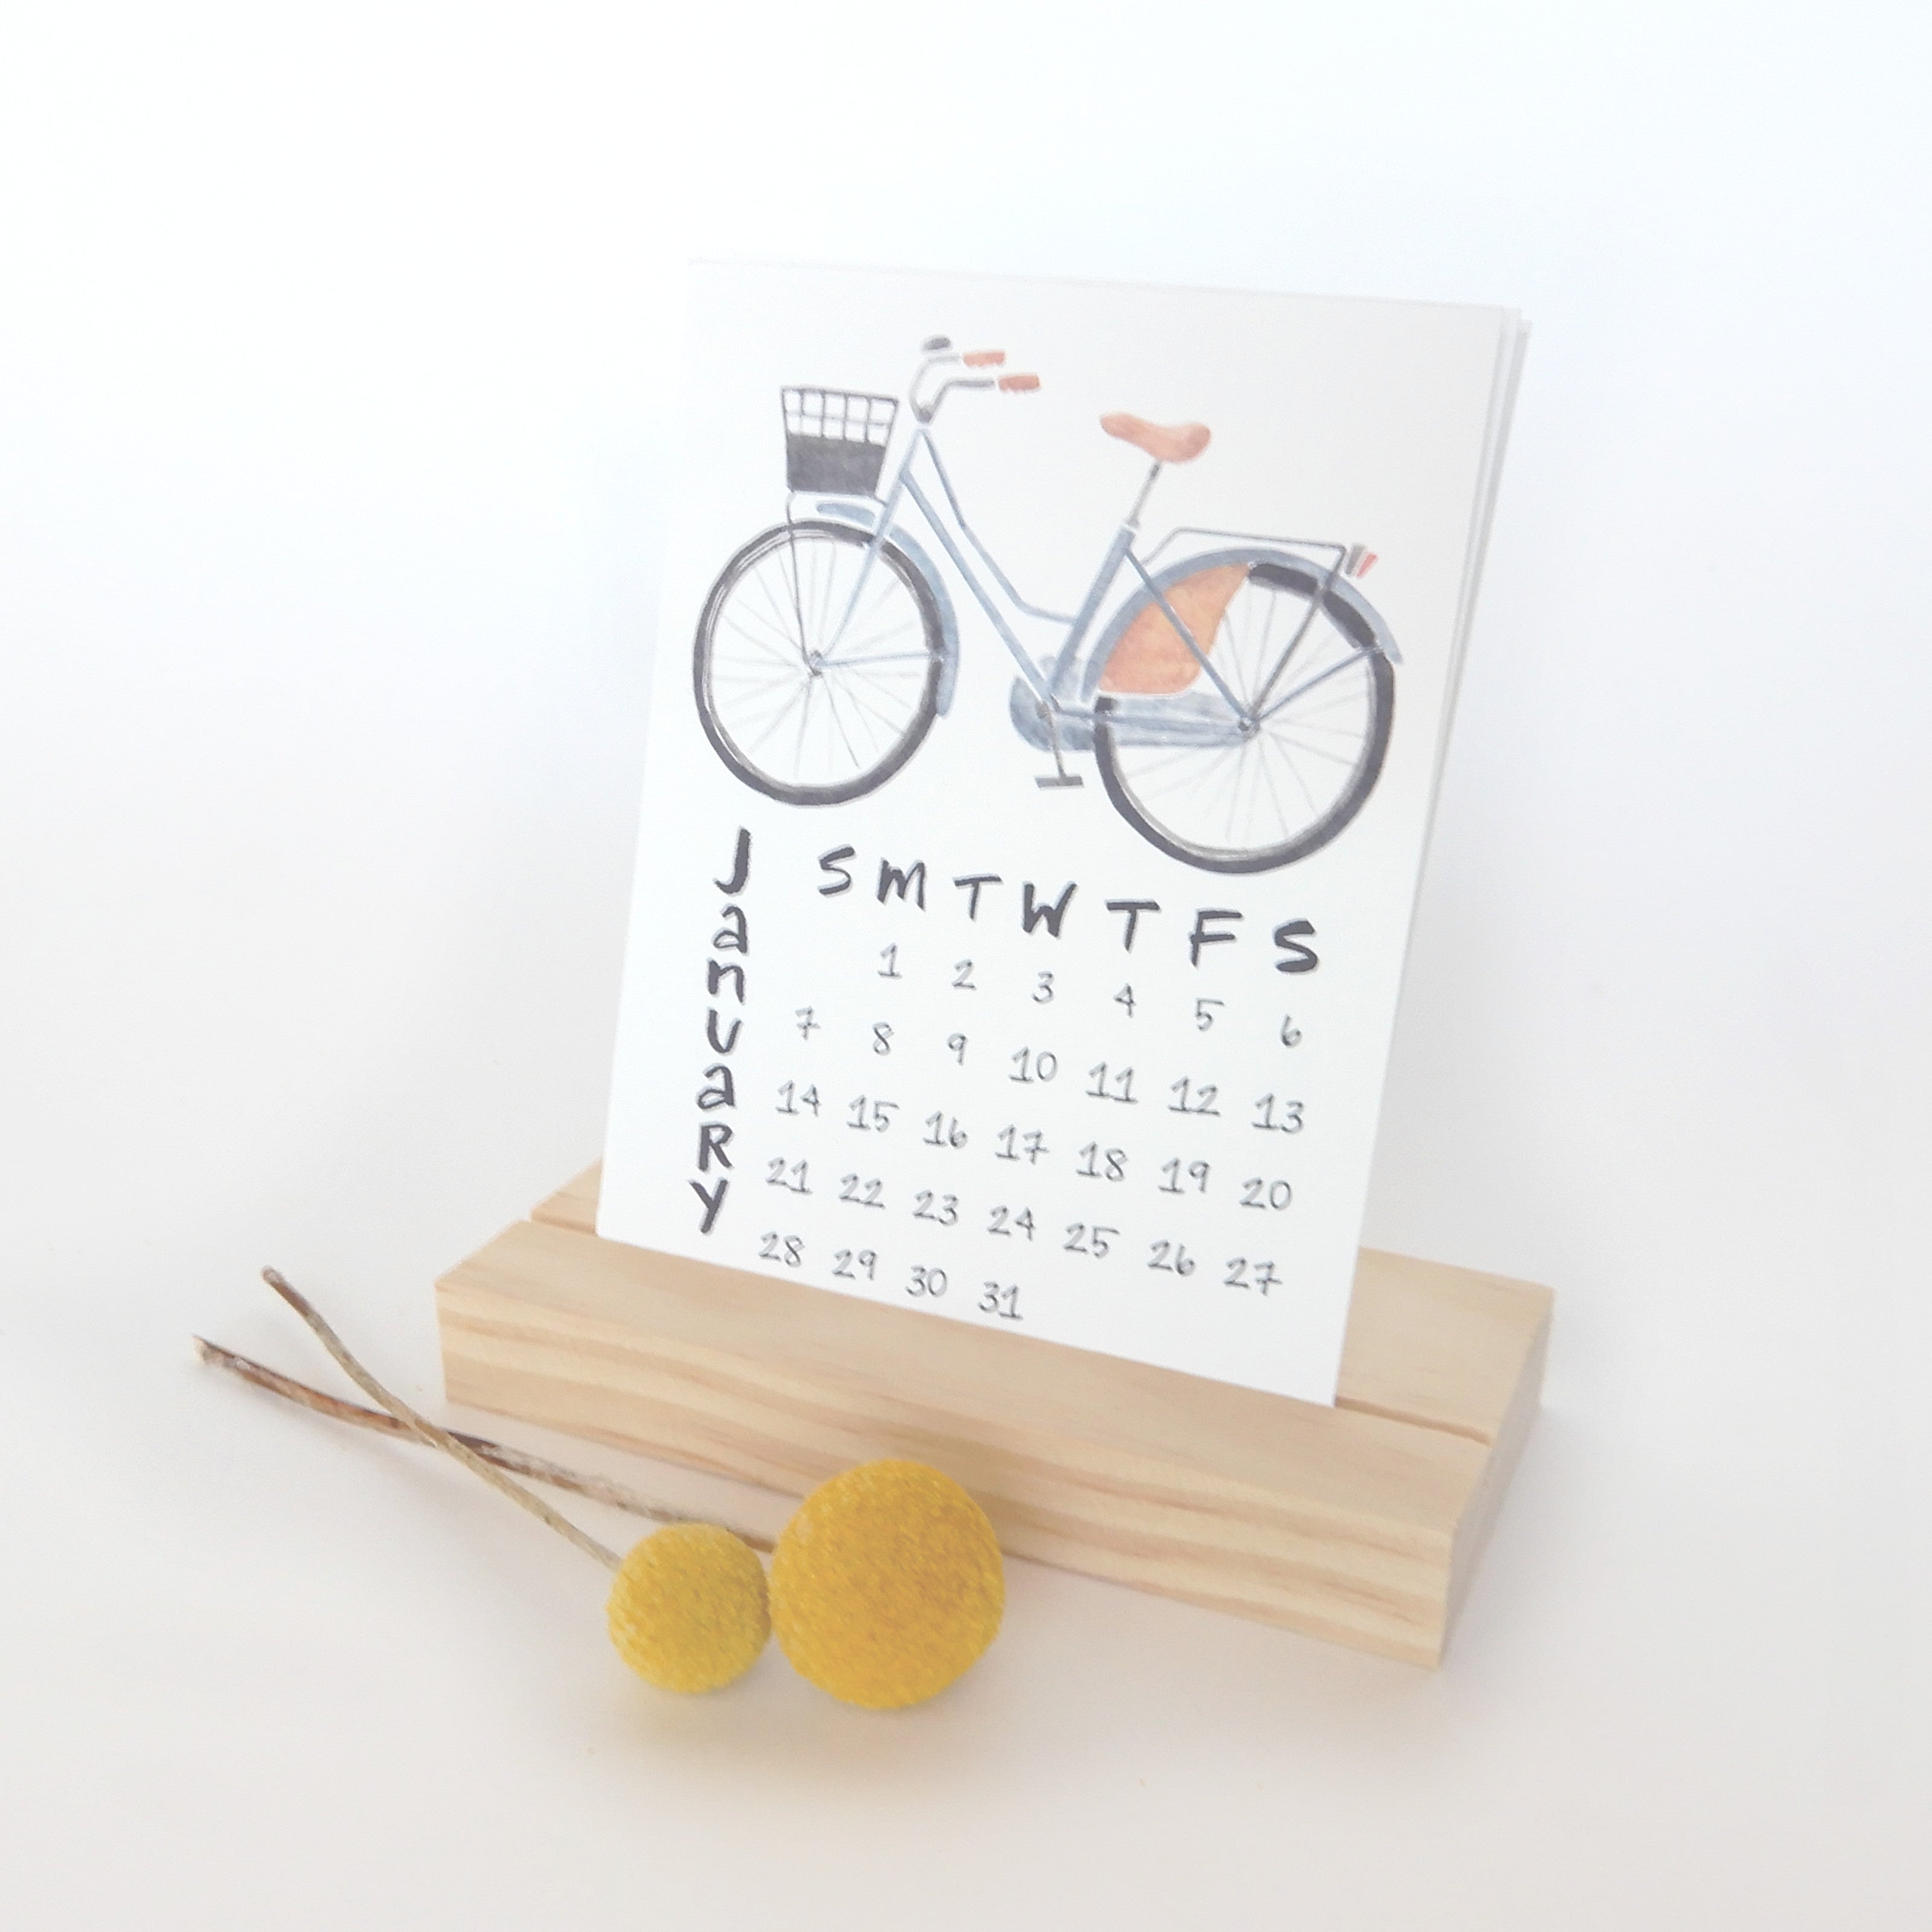 2020 Bike Desk Calendar Sketchy Notions